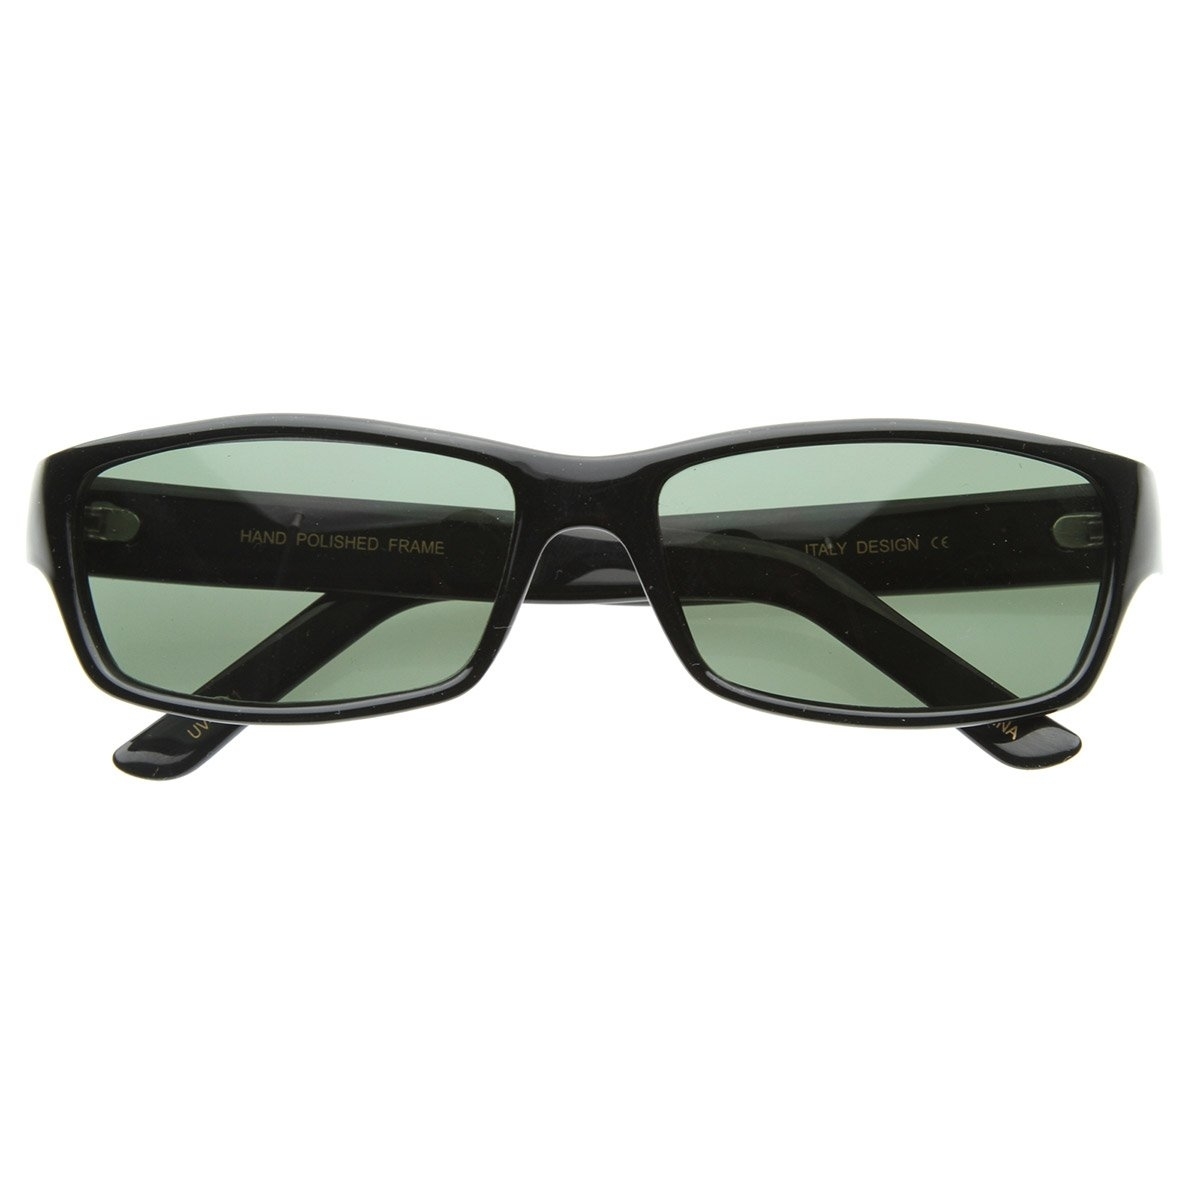 Basic Modern Casual Lifestyle Rectangle Sunglasses G-15 Lens